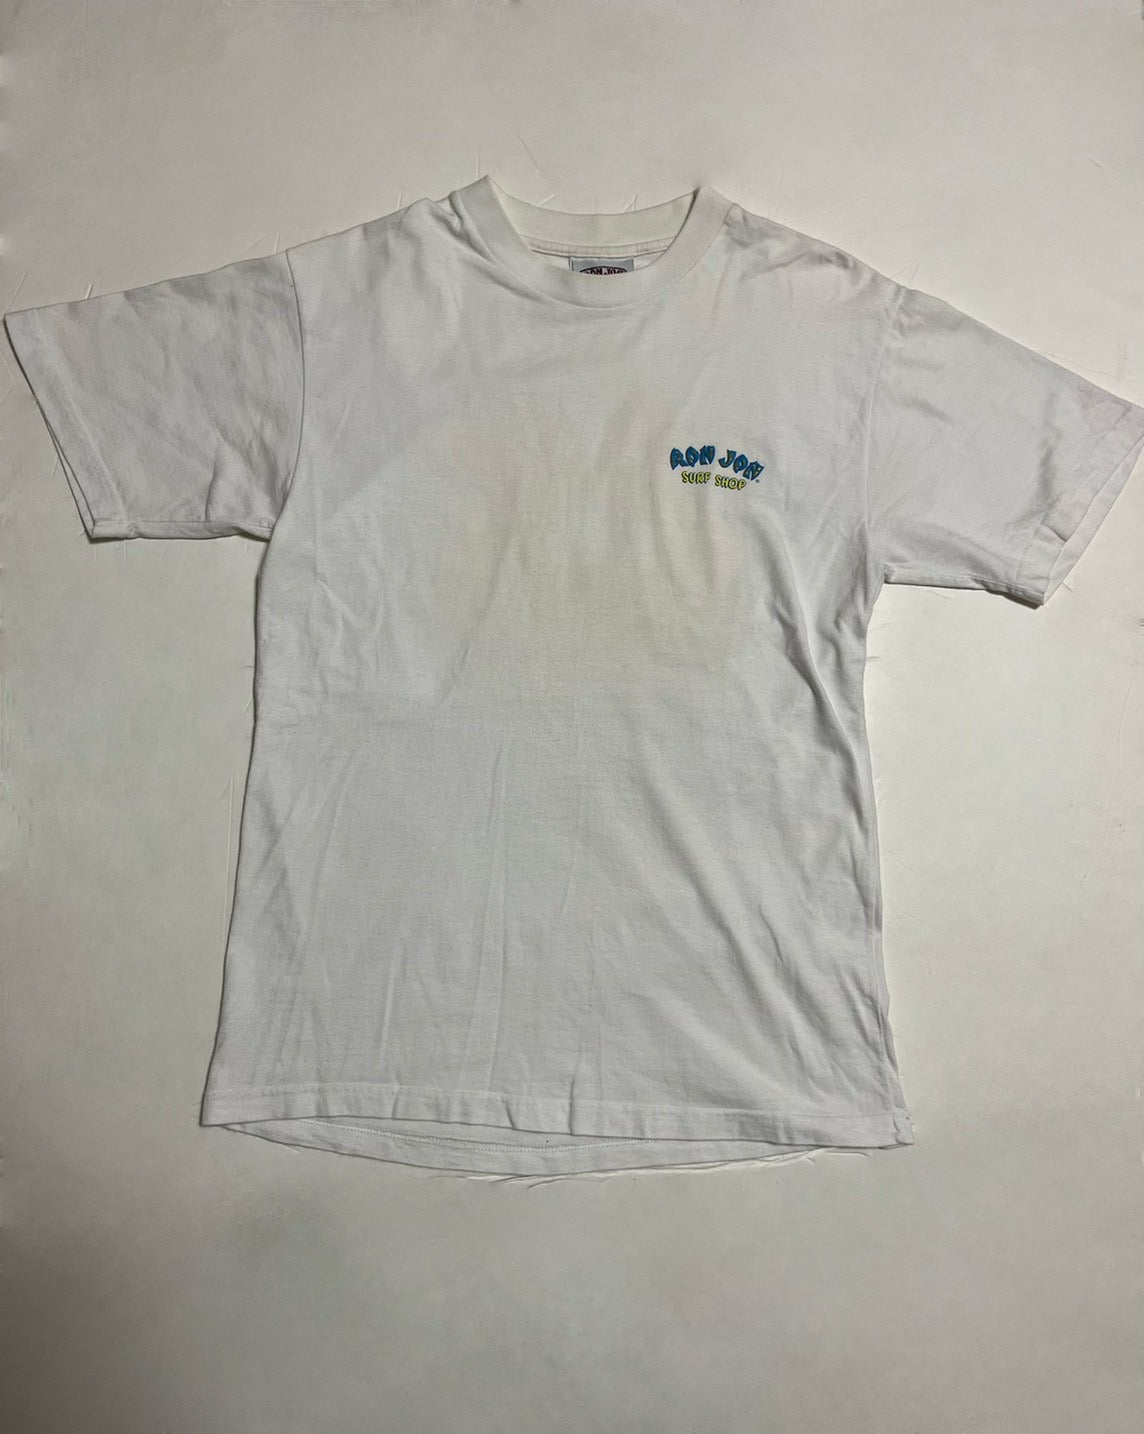 【USED】RonJon Surf Shop T-Shirt cocoa beach T-shirt (men's M)